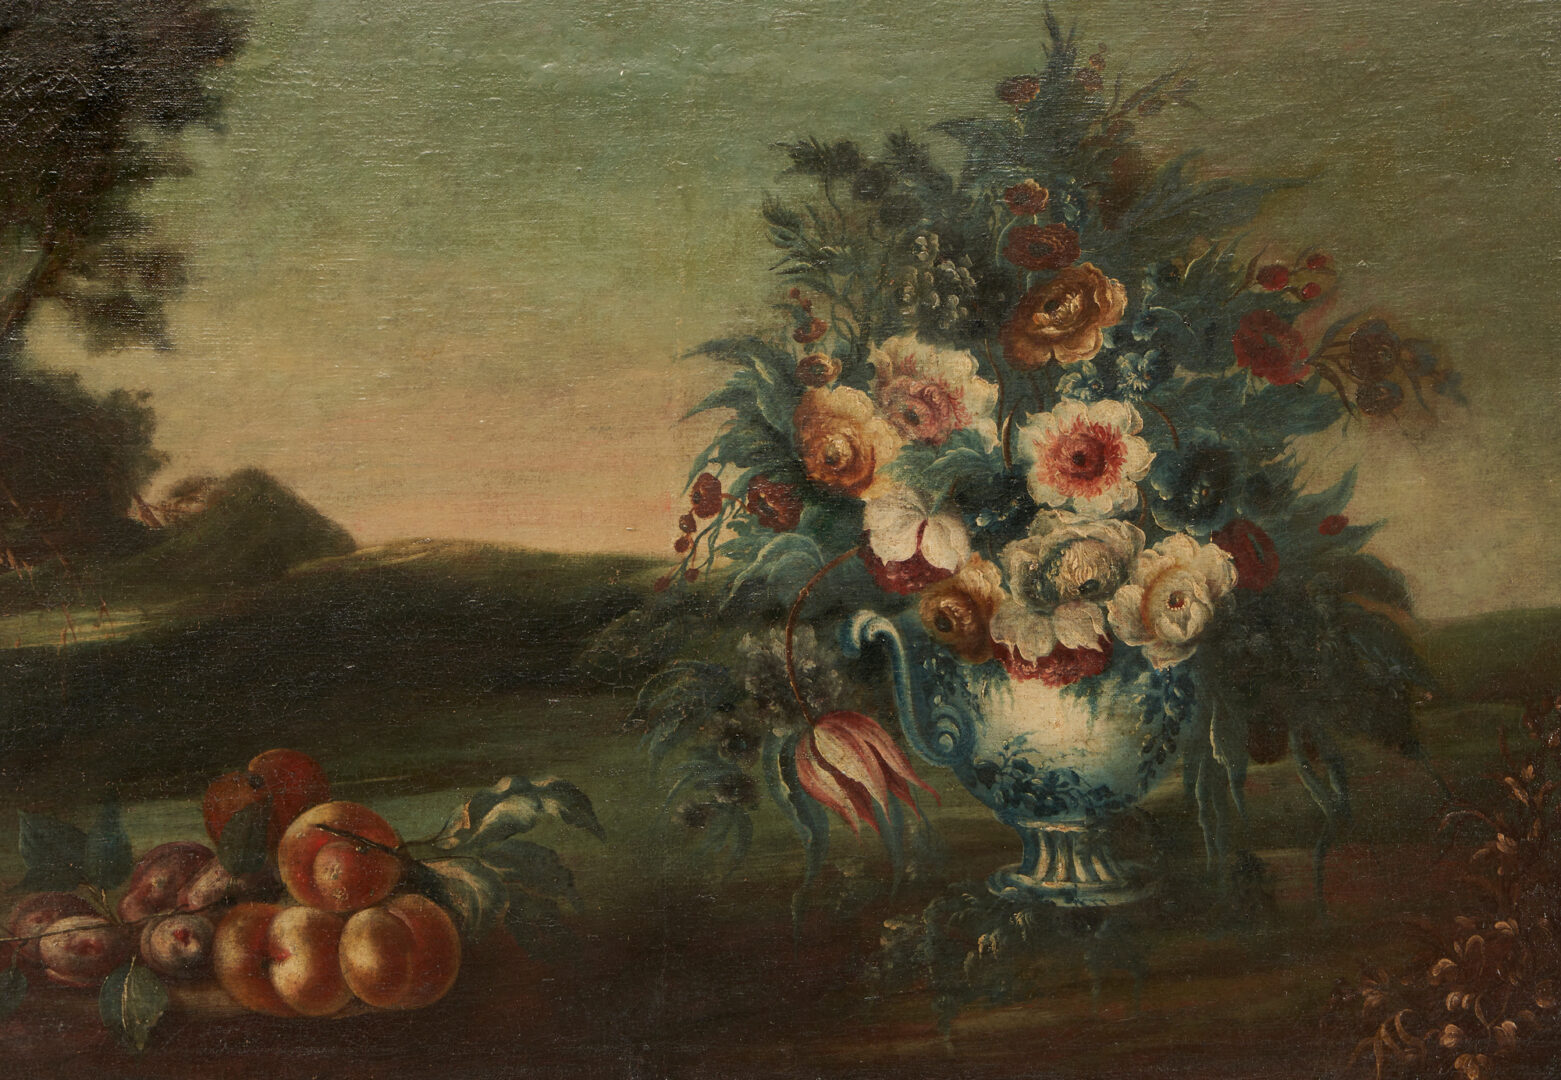 Lot 394: Flemish School O/C Still Life Painting, 18th Century